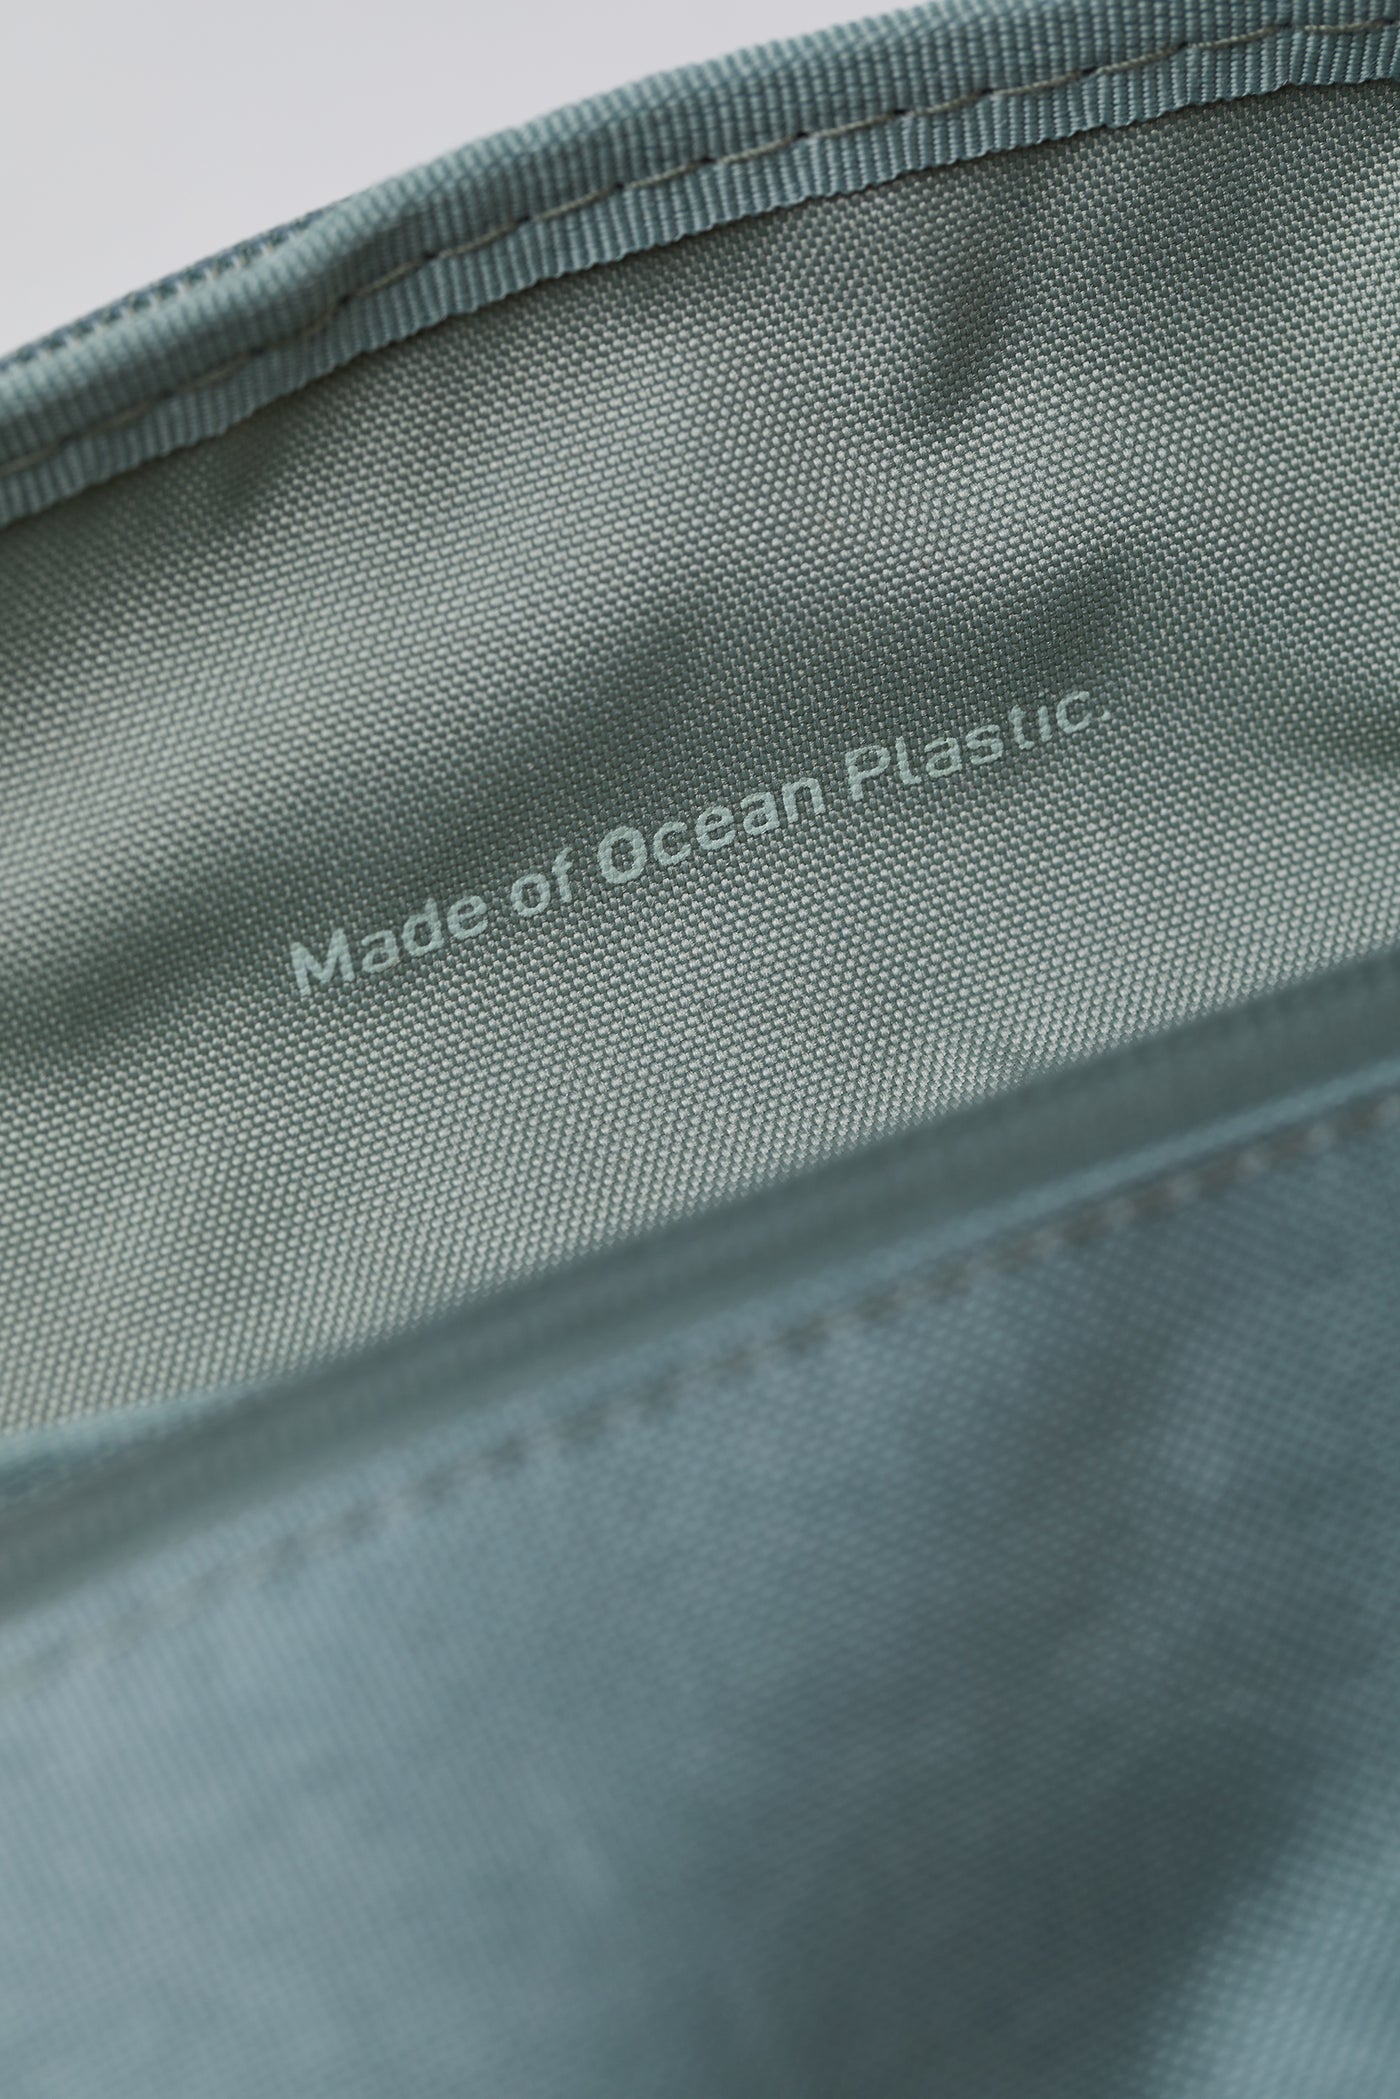 GOT Bag - Hip Bag aus Meeresplastik Reef - Nahmoo